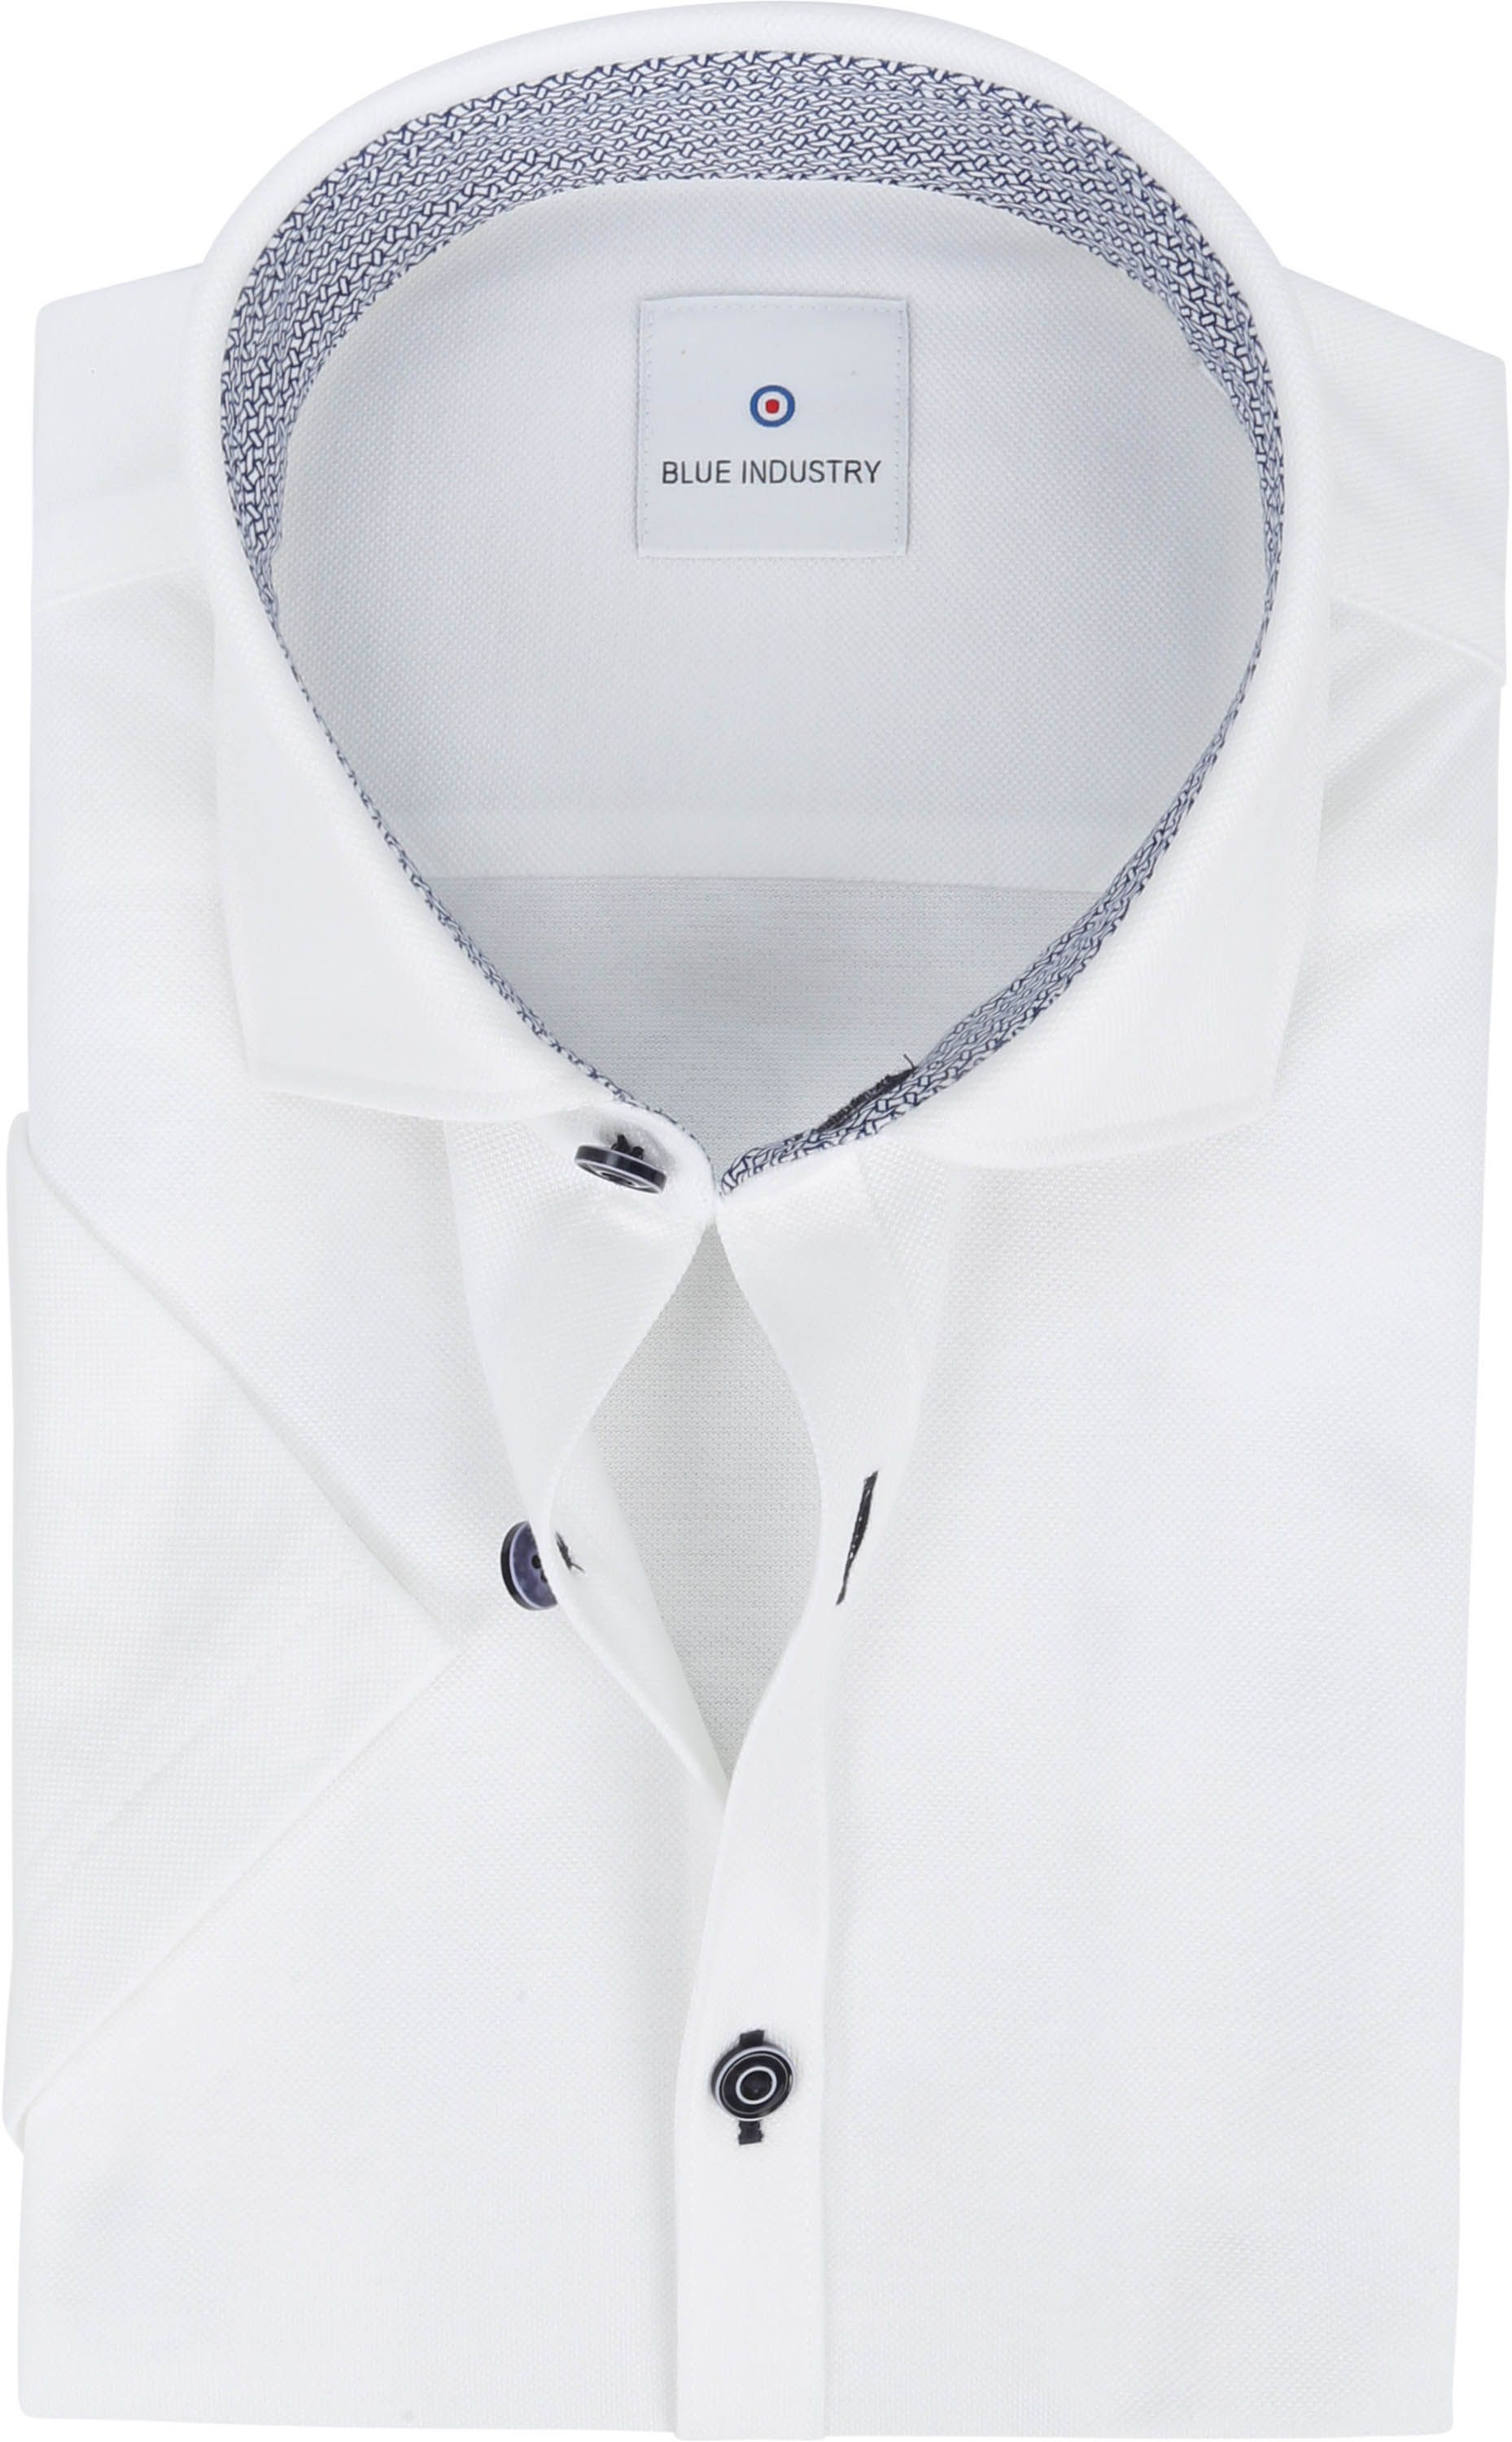 Blue Industry SHS Shirt Jersey White size 15